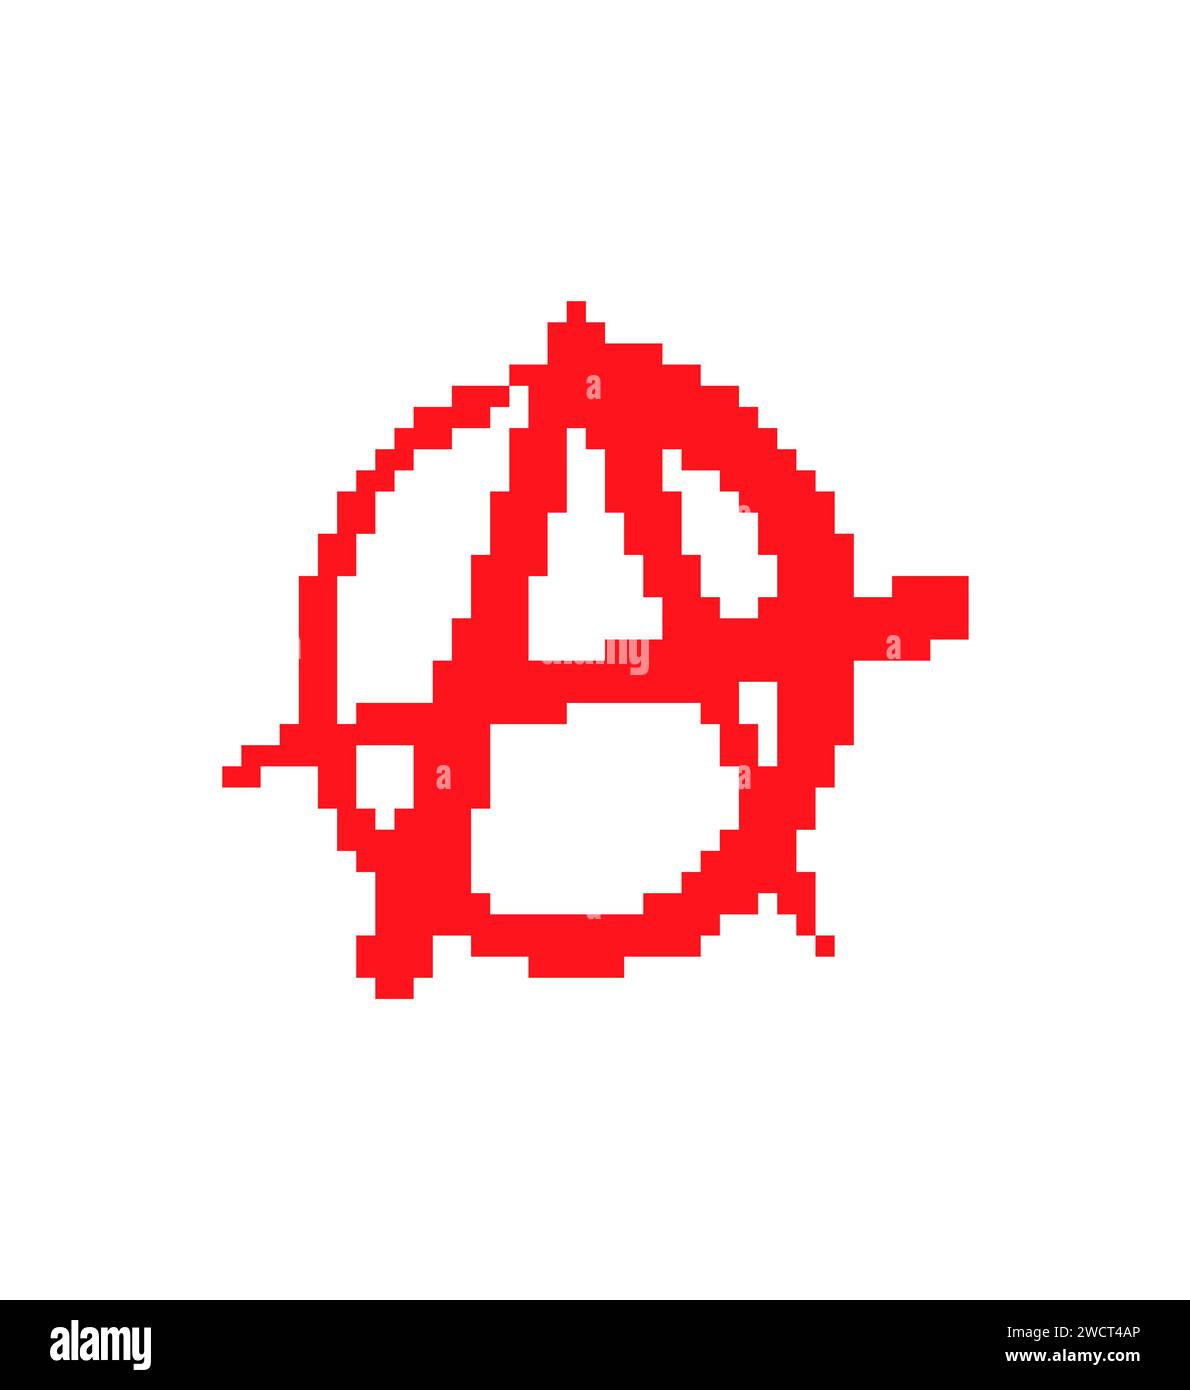 Anarchy sign pixel art. 8 bit lack of organized power symbol pixelated Stock Vector